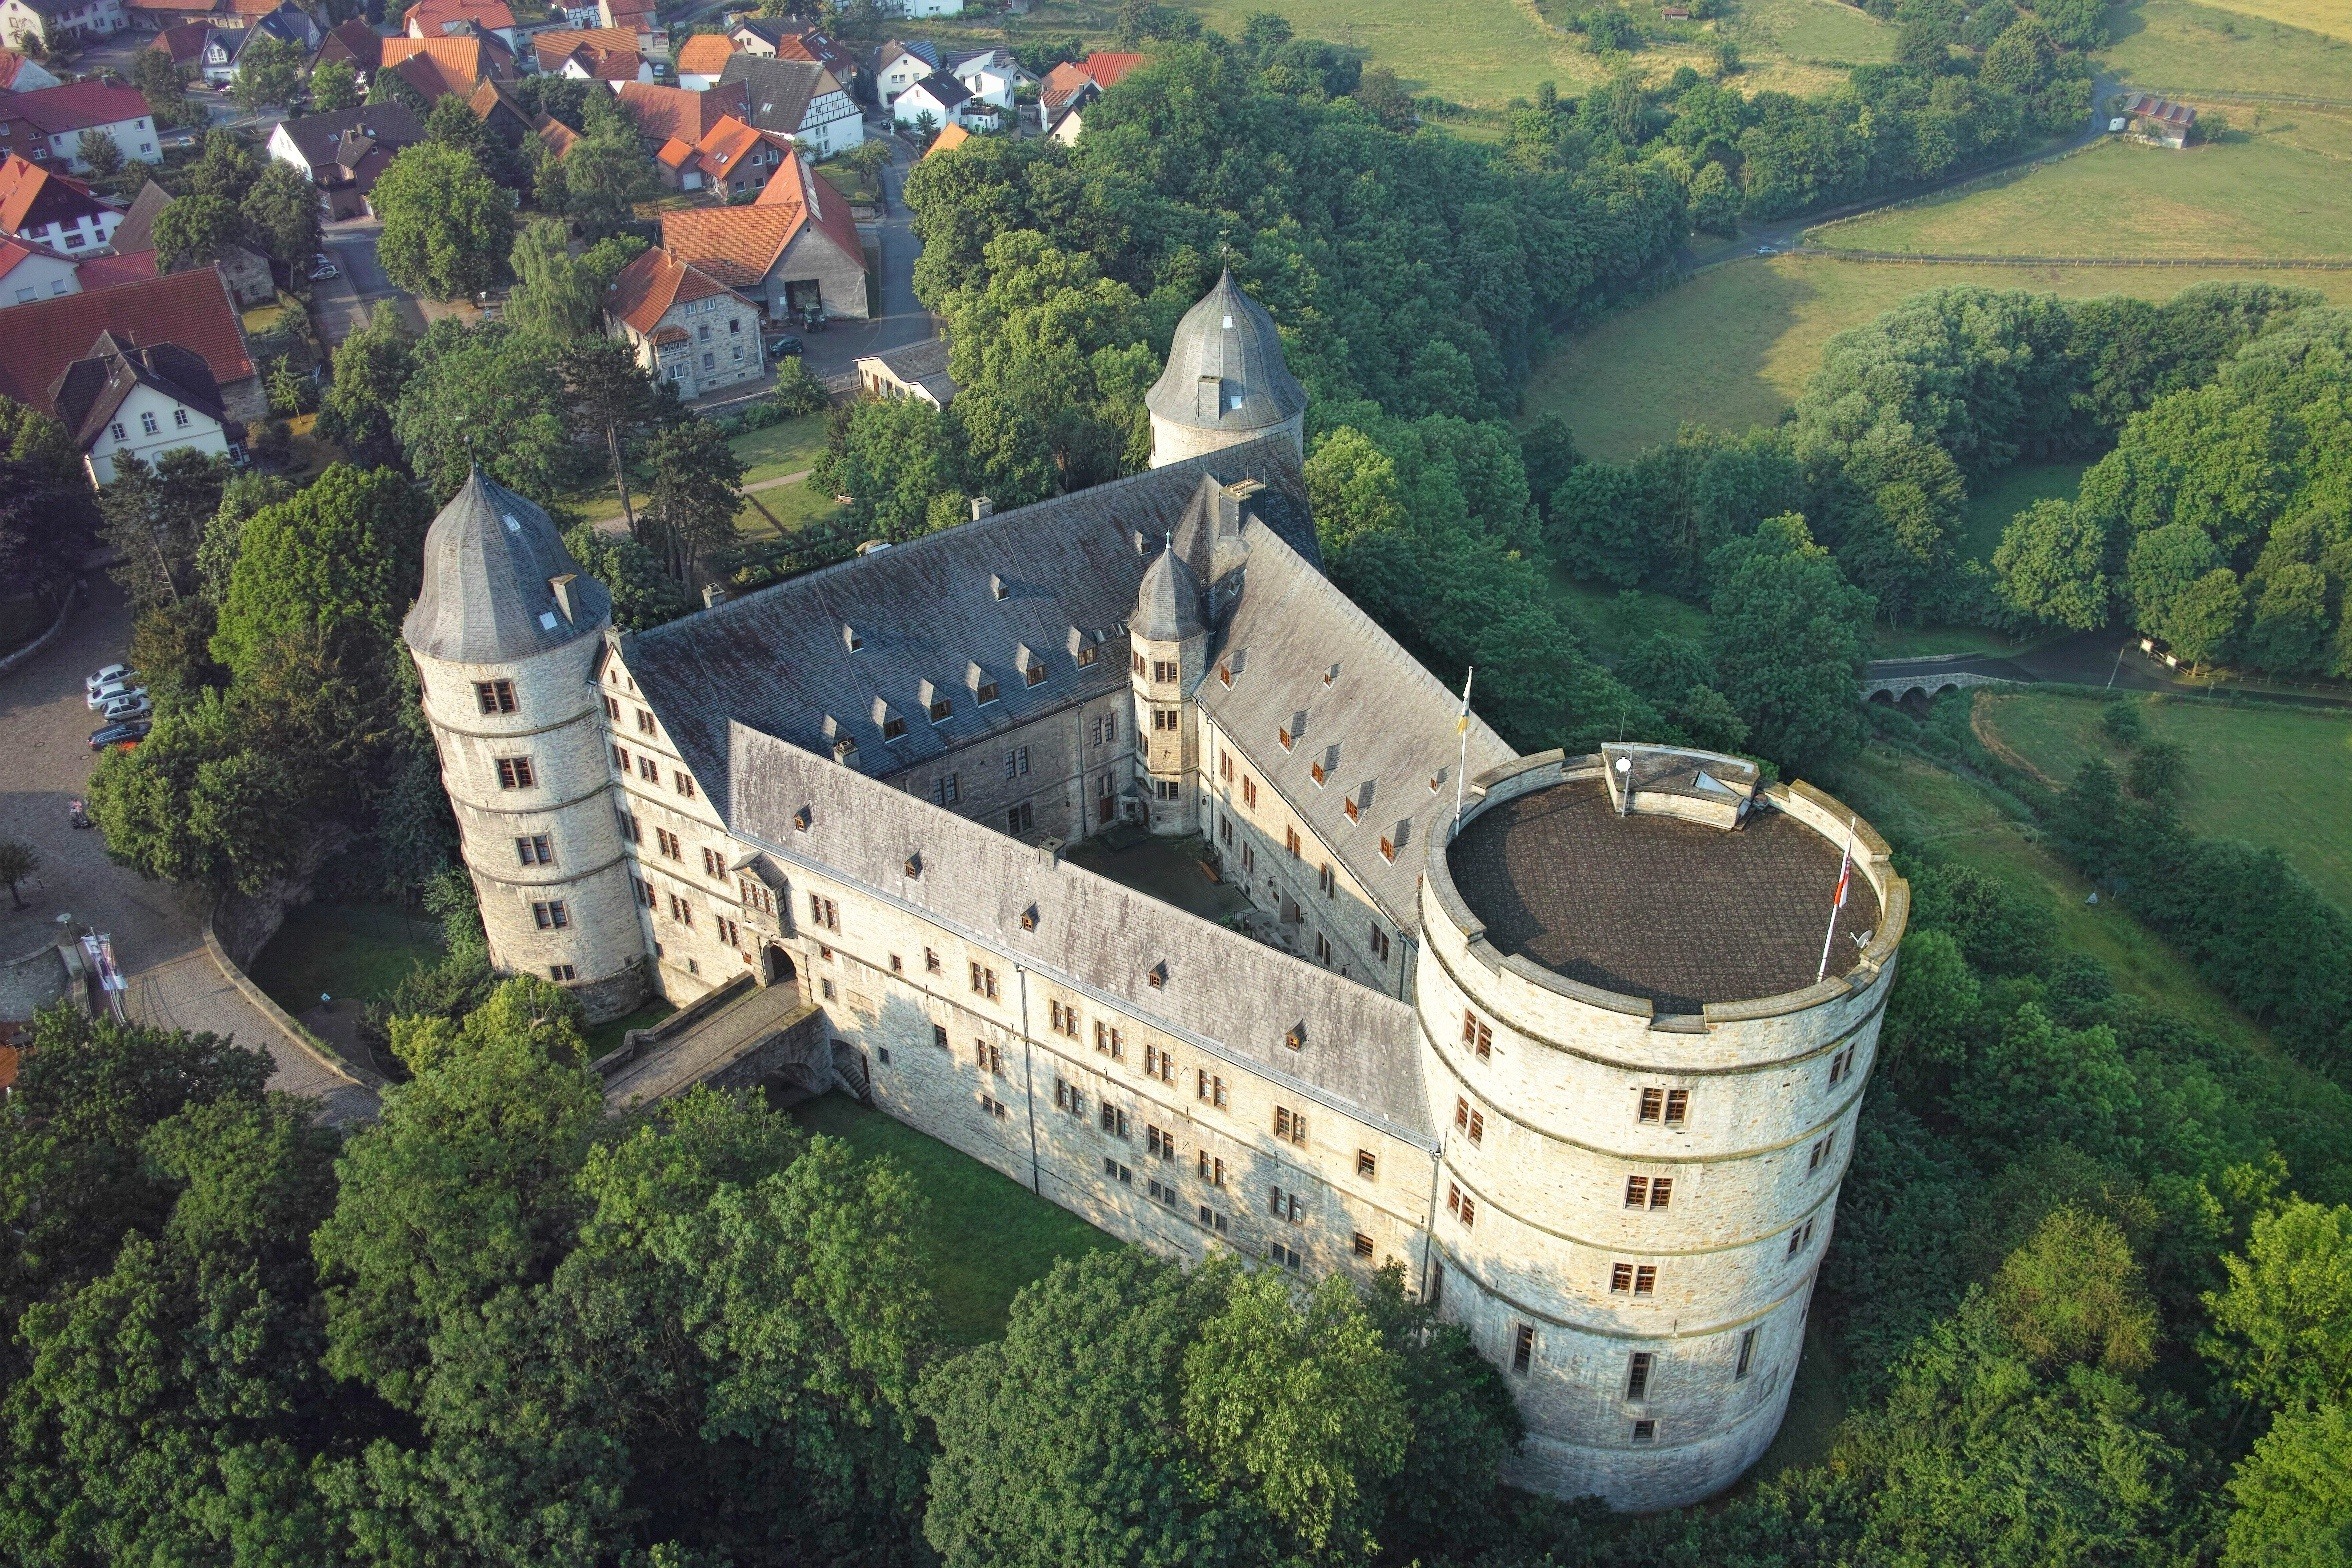 Wewelsburg Castle - Germany